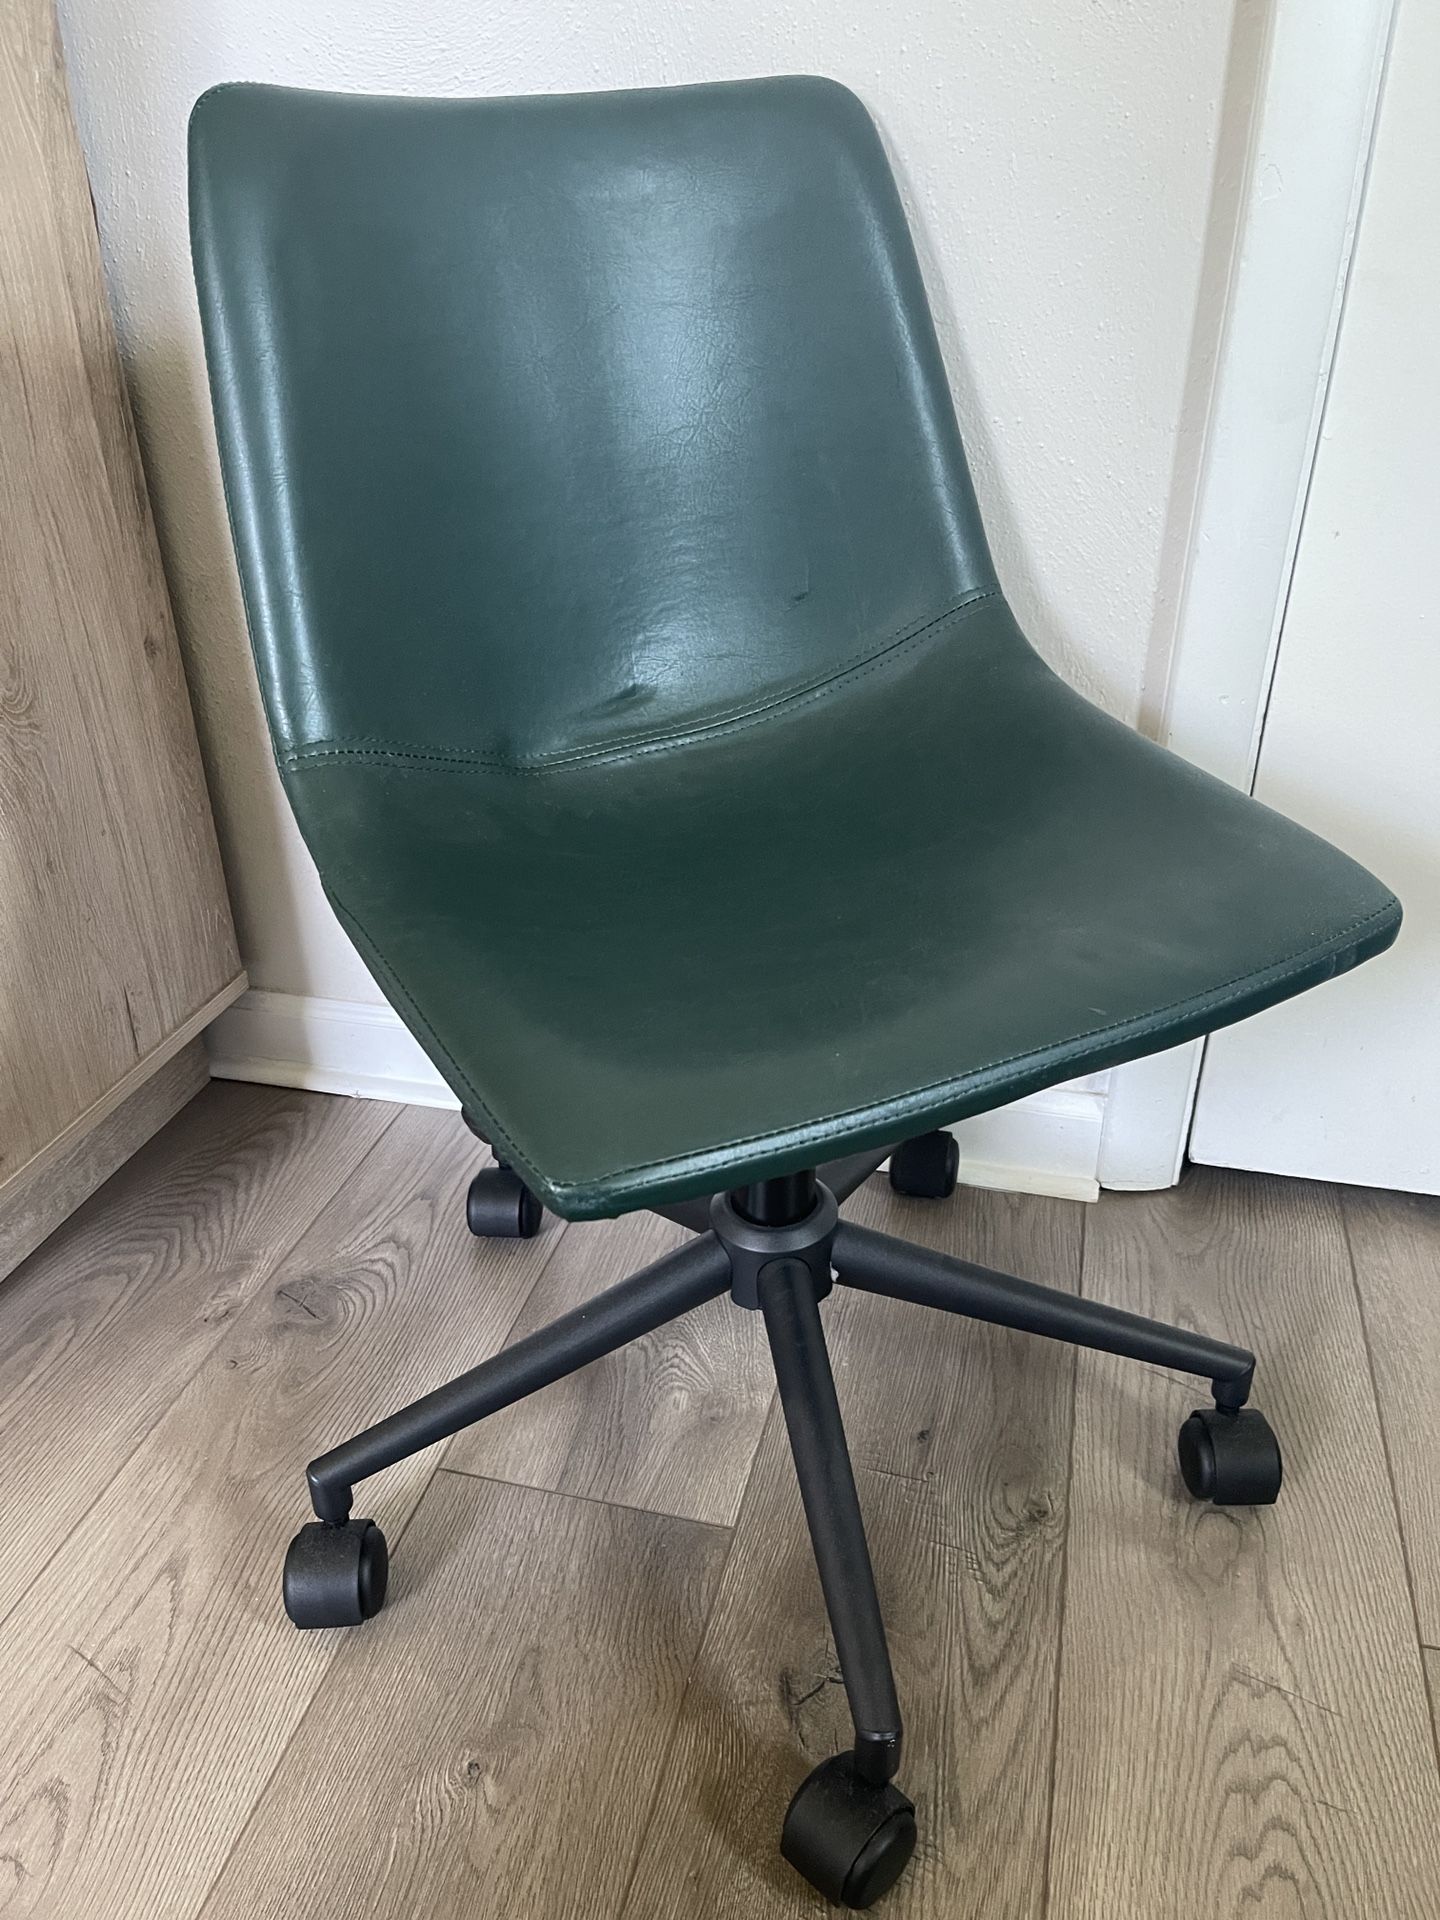 Green Desk Chair Adjustable Height